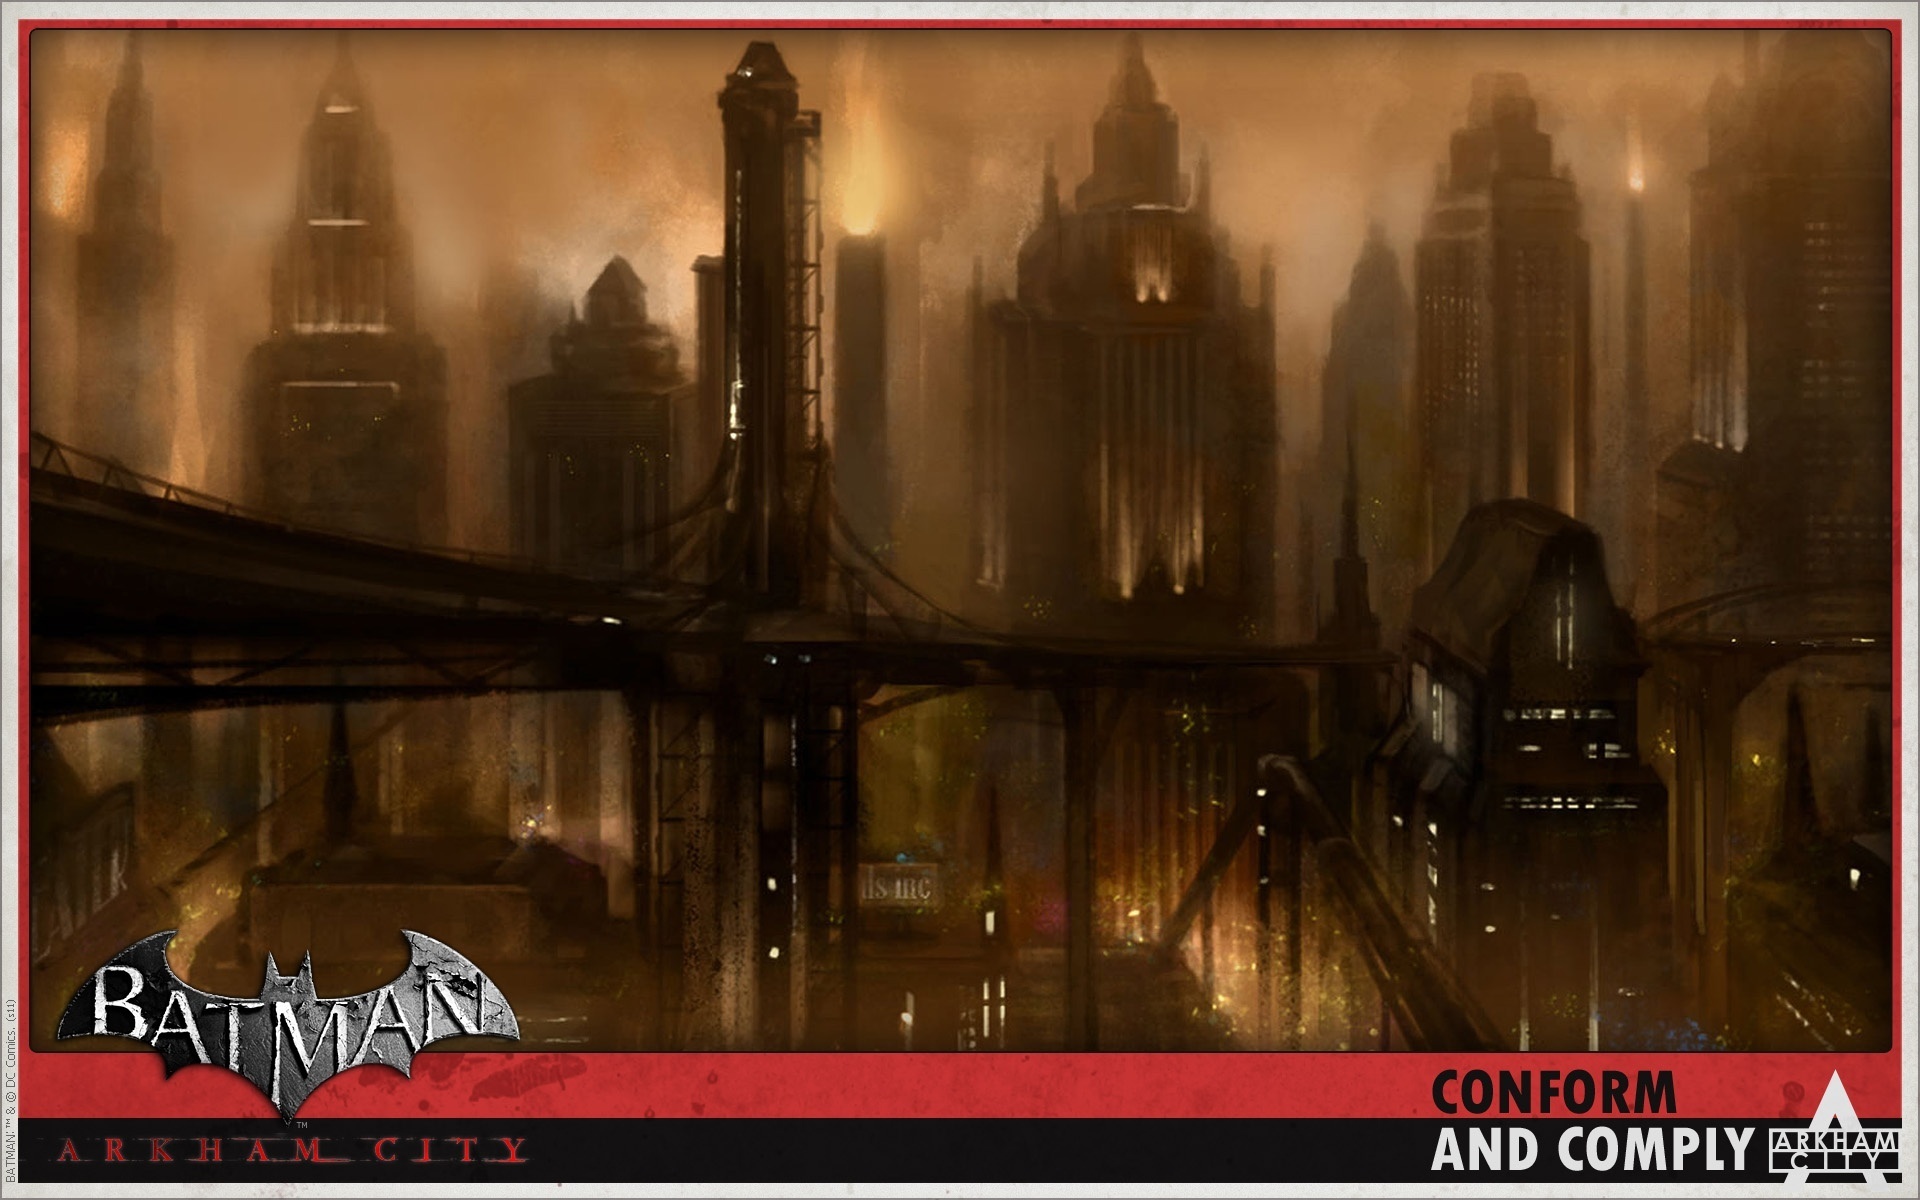 Arkham City - Batman Arkham City Wallpaper (21499922) - Fanpop